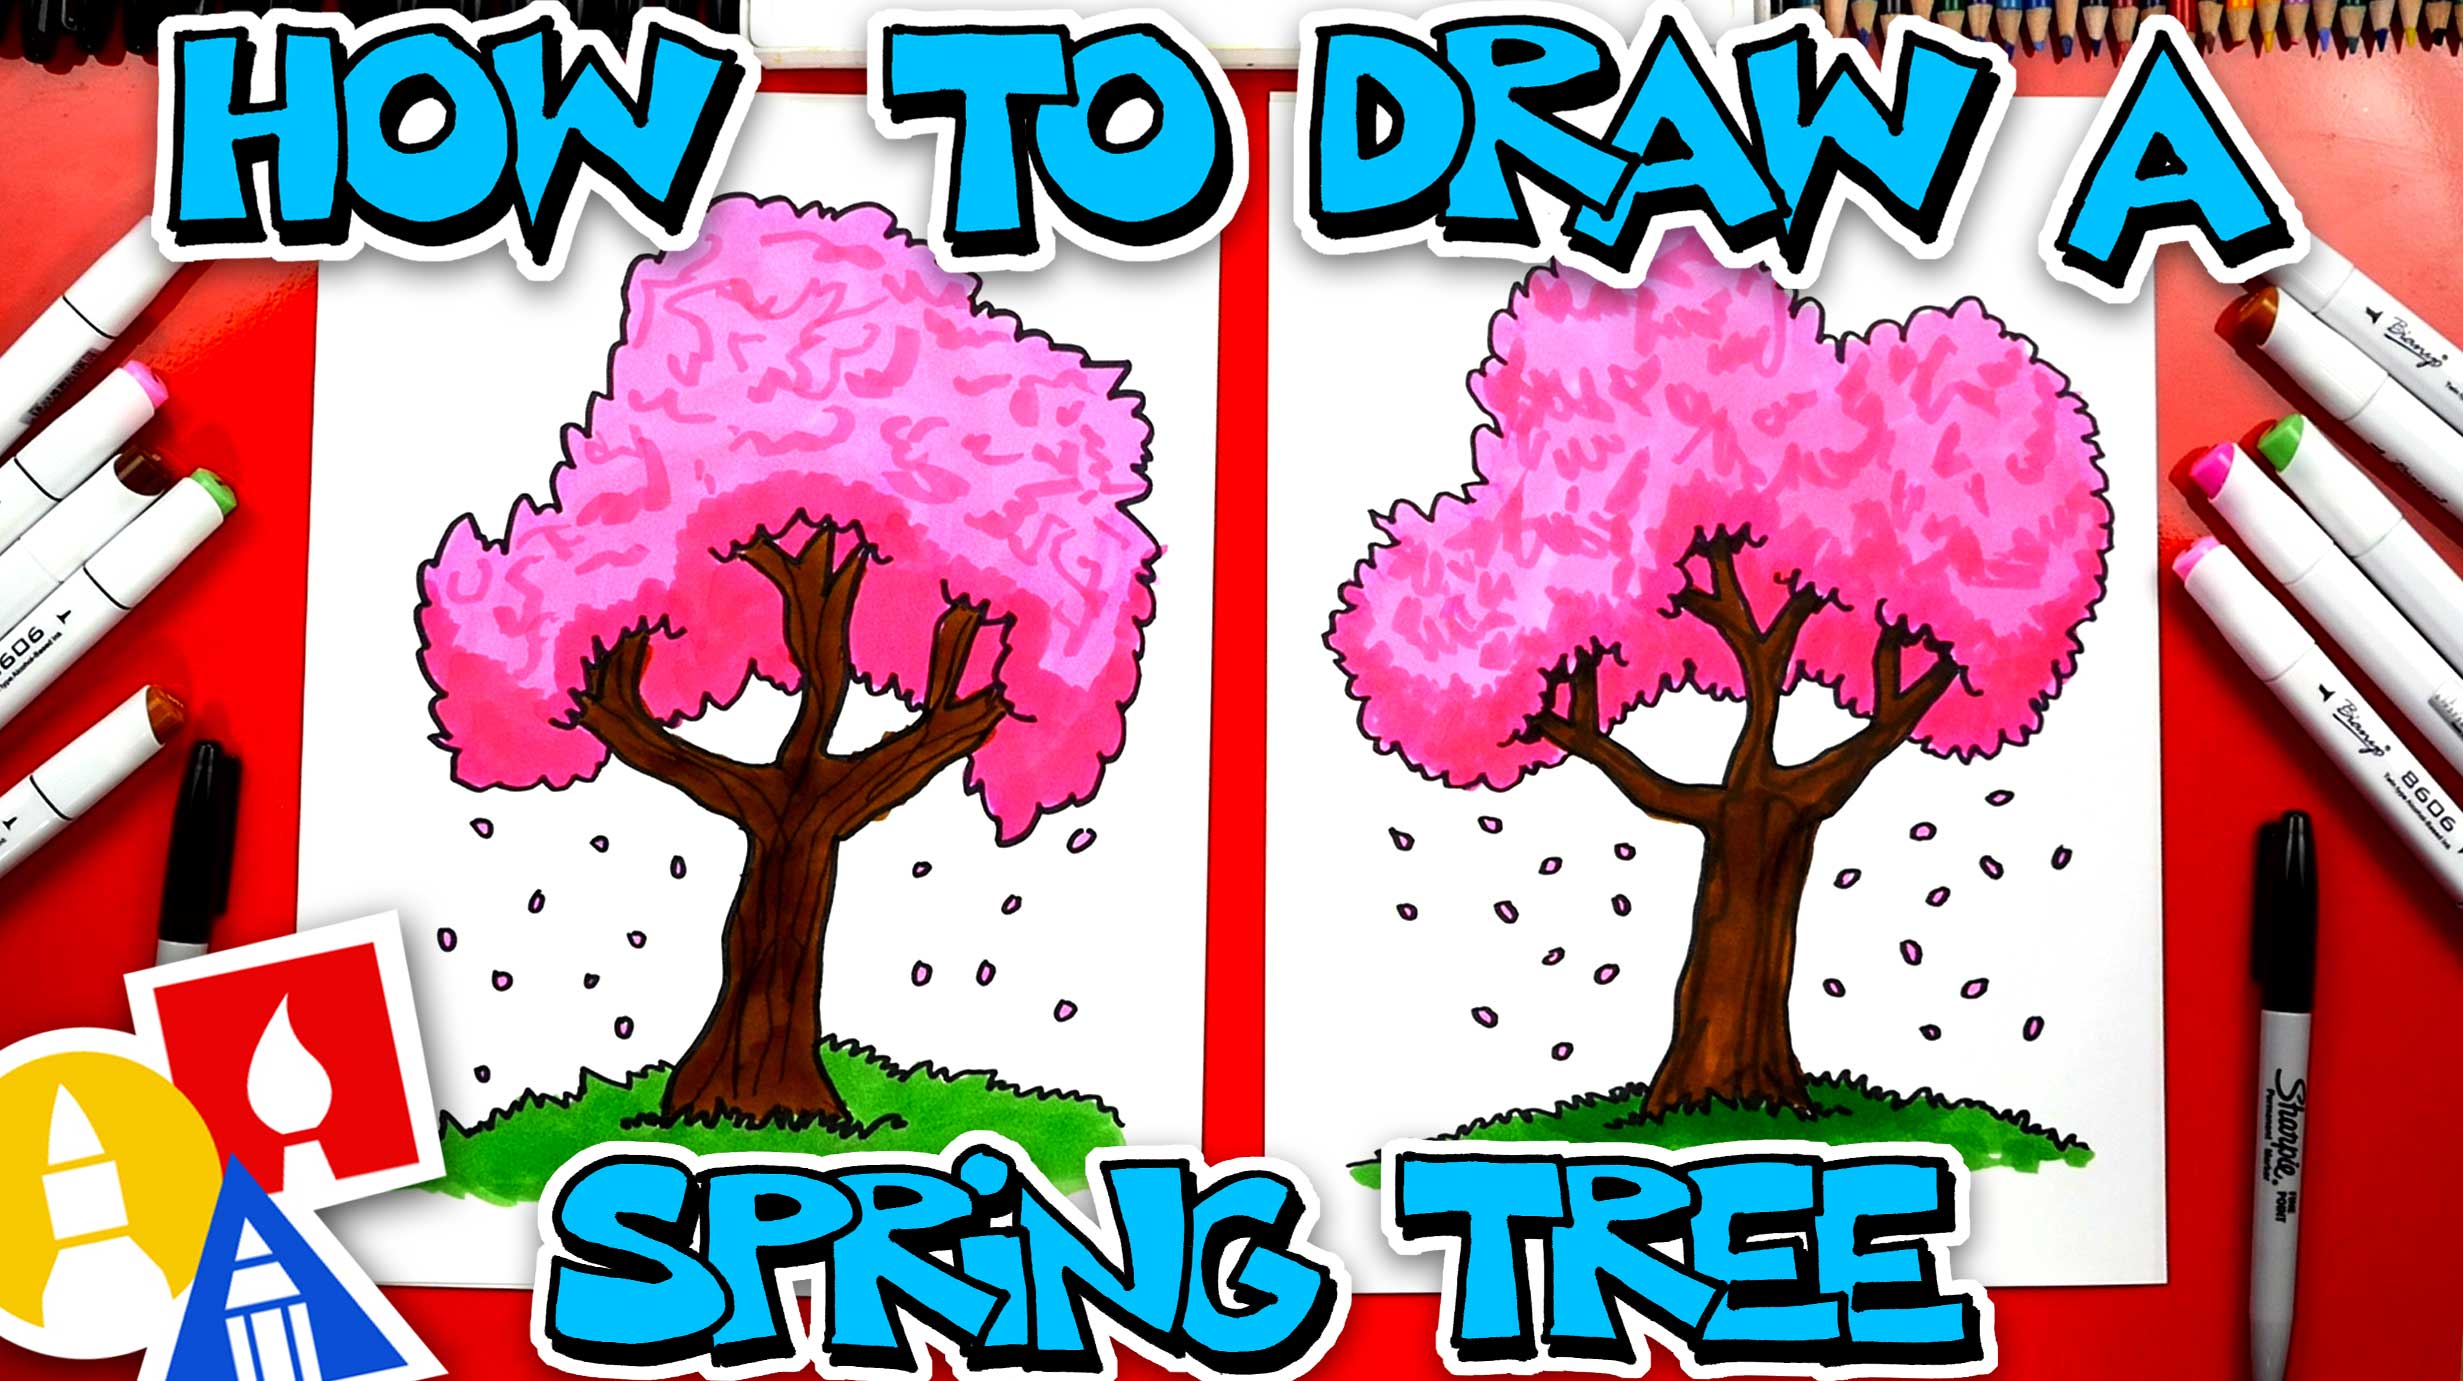 Cherry Blossom Tree Drawing by PigWestac16 on DeviantArt